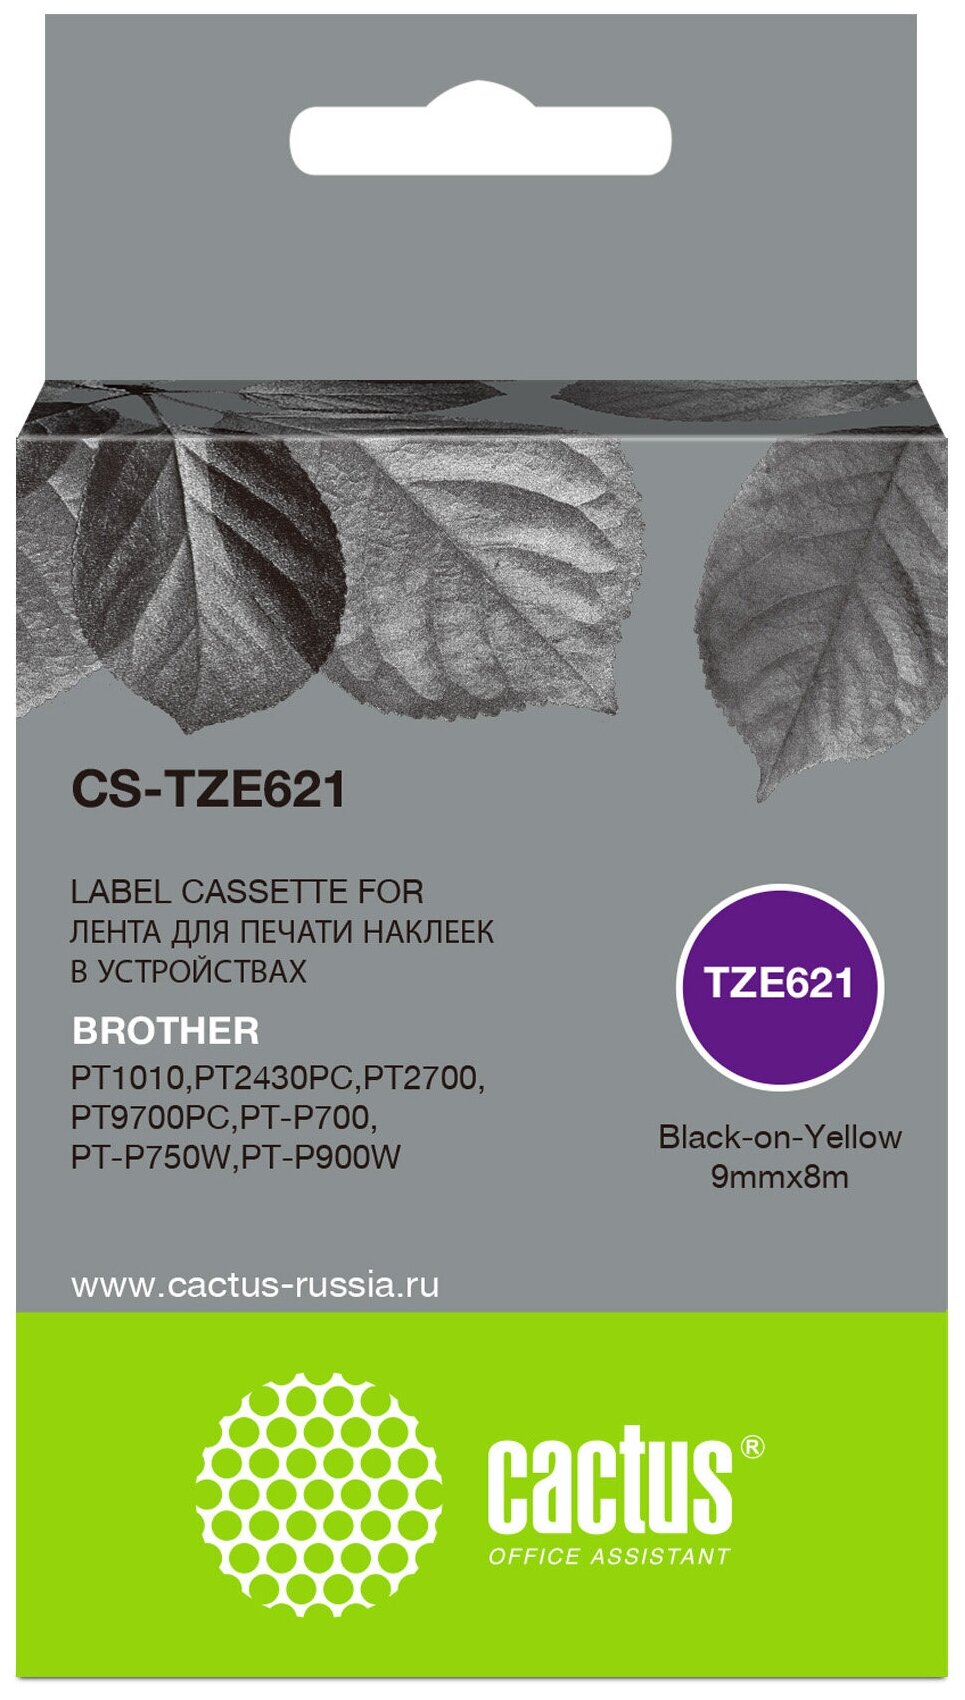 Картридж Cactus CS-TZE621, совместимый